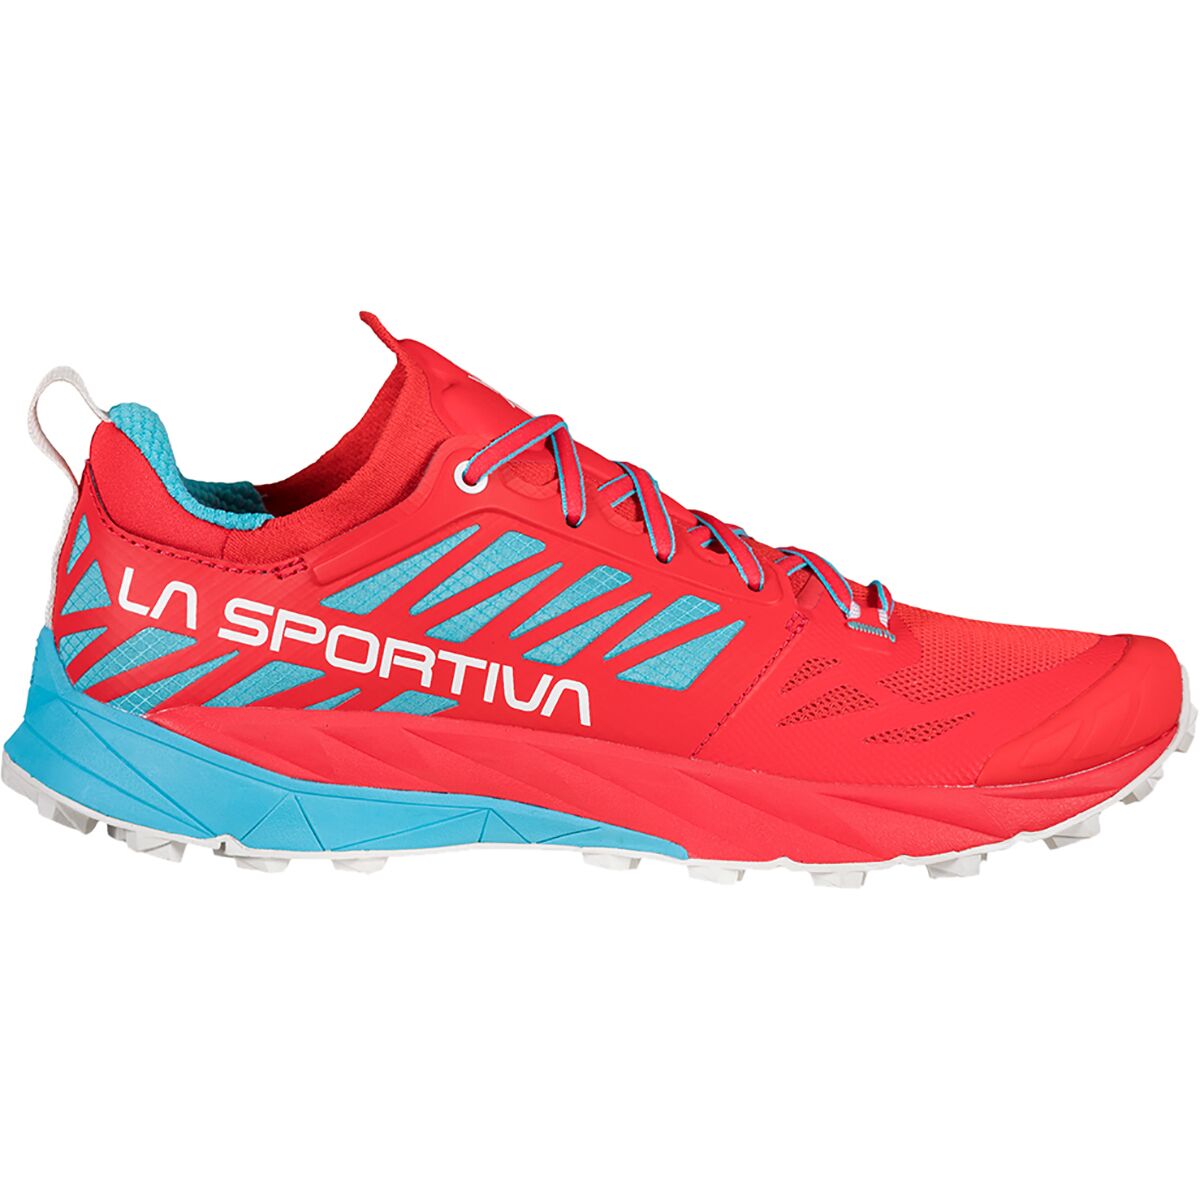 La Sportiva Kaptiva Trail Running Shoe - Women's